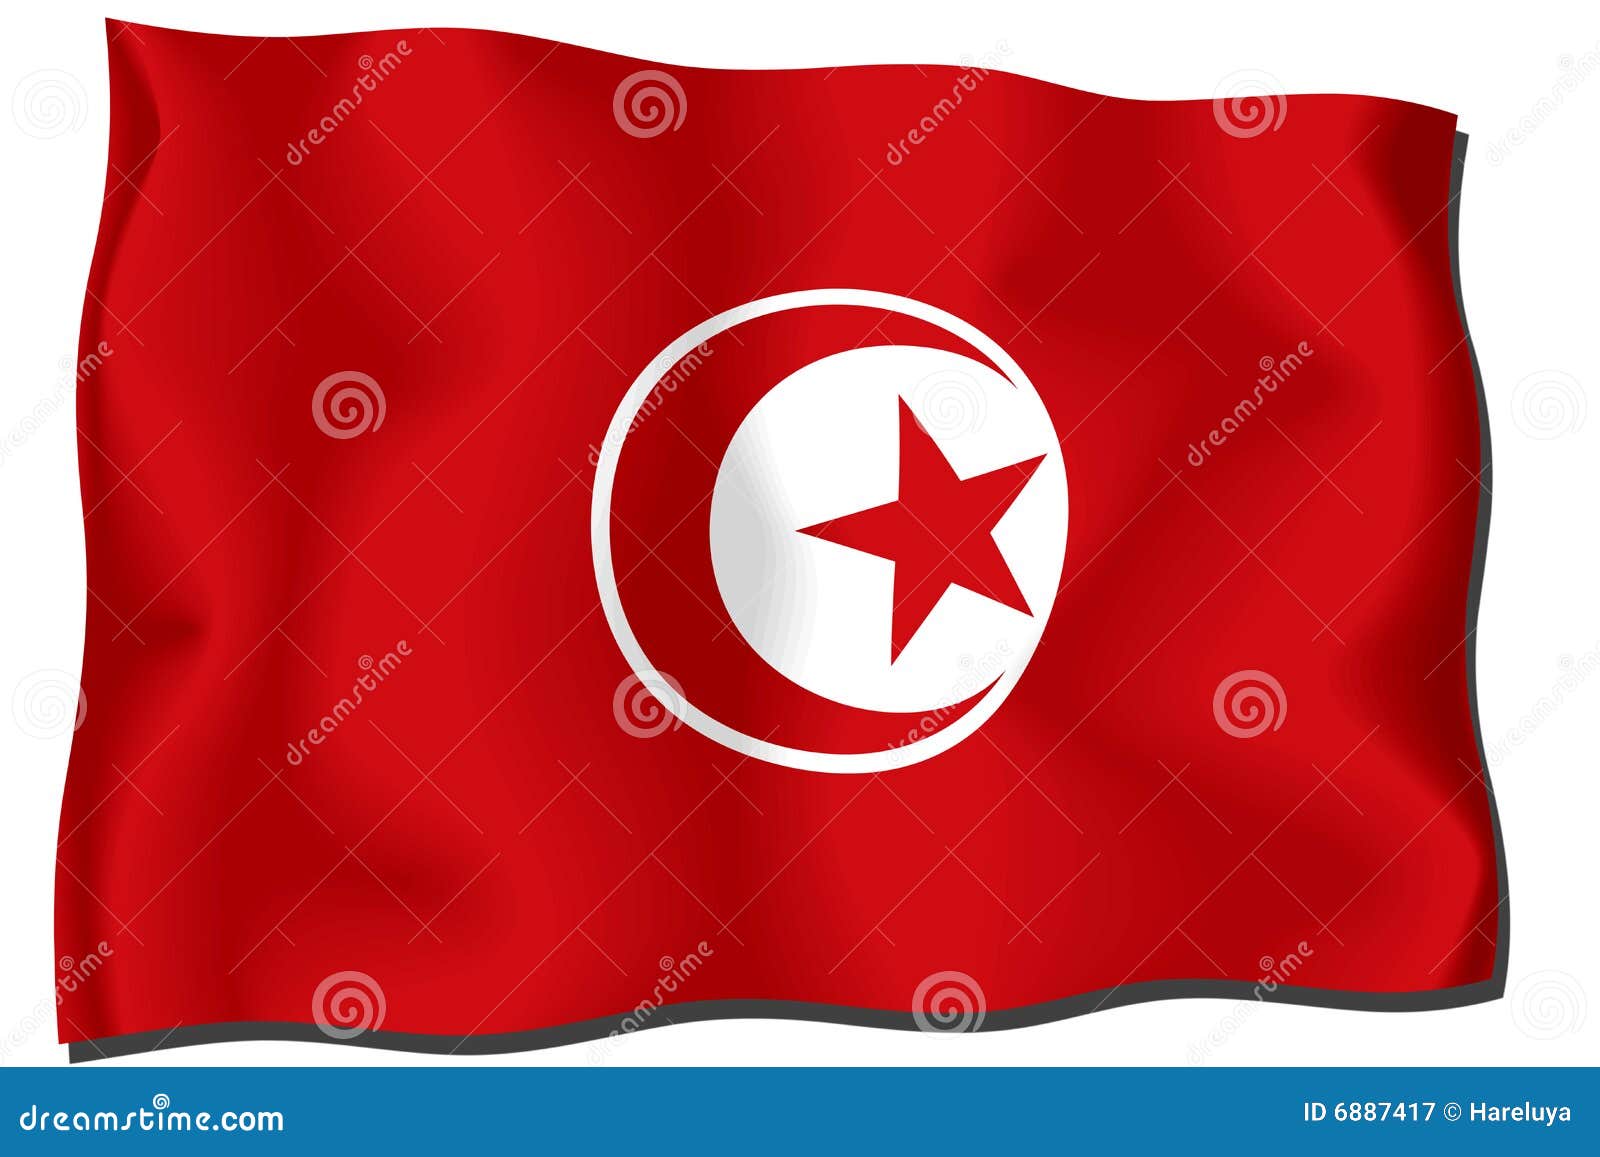 Tunis Flag stock illustration. Illustration of country - 6887417